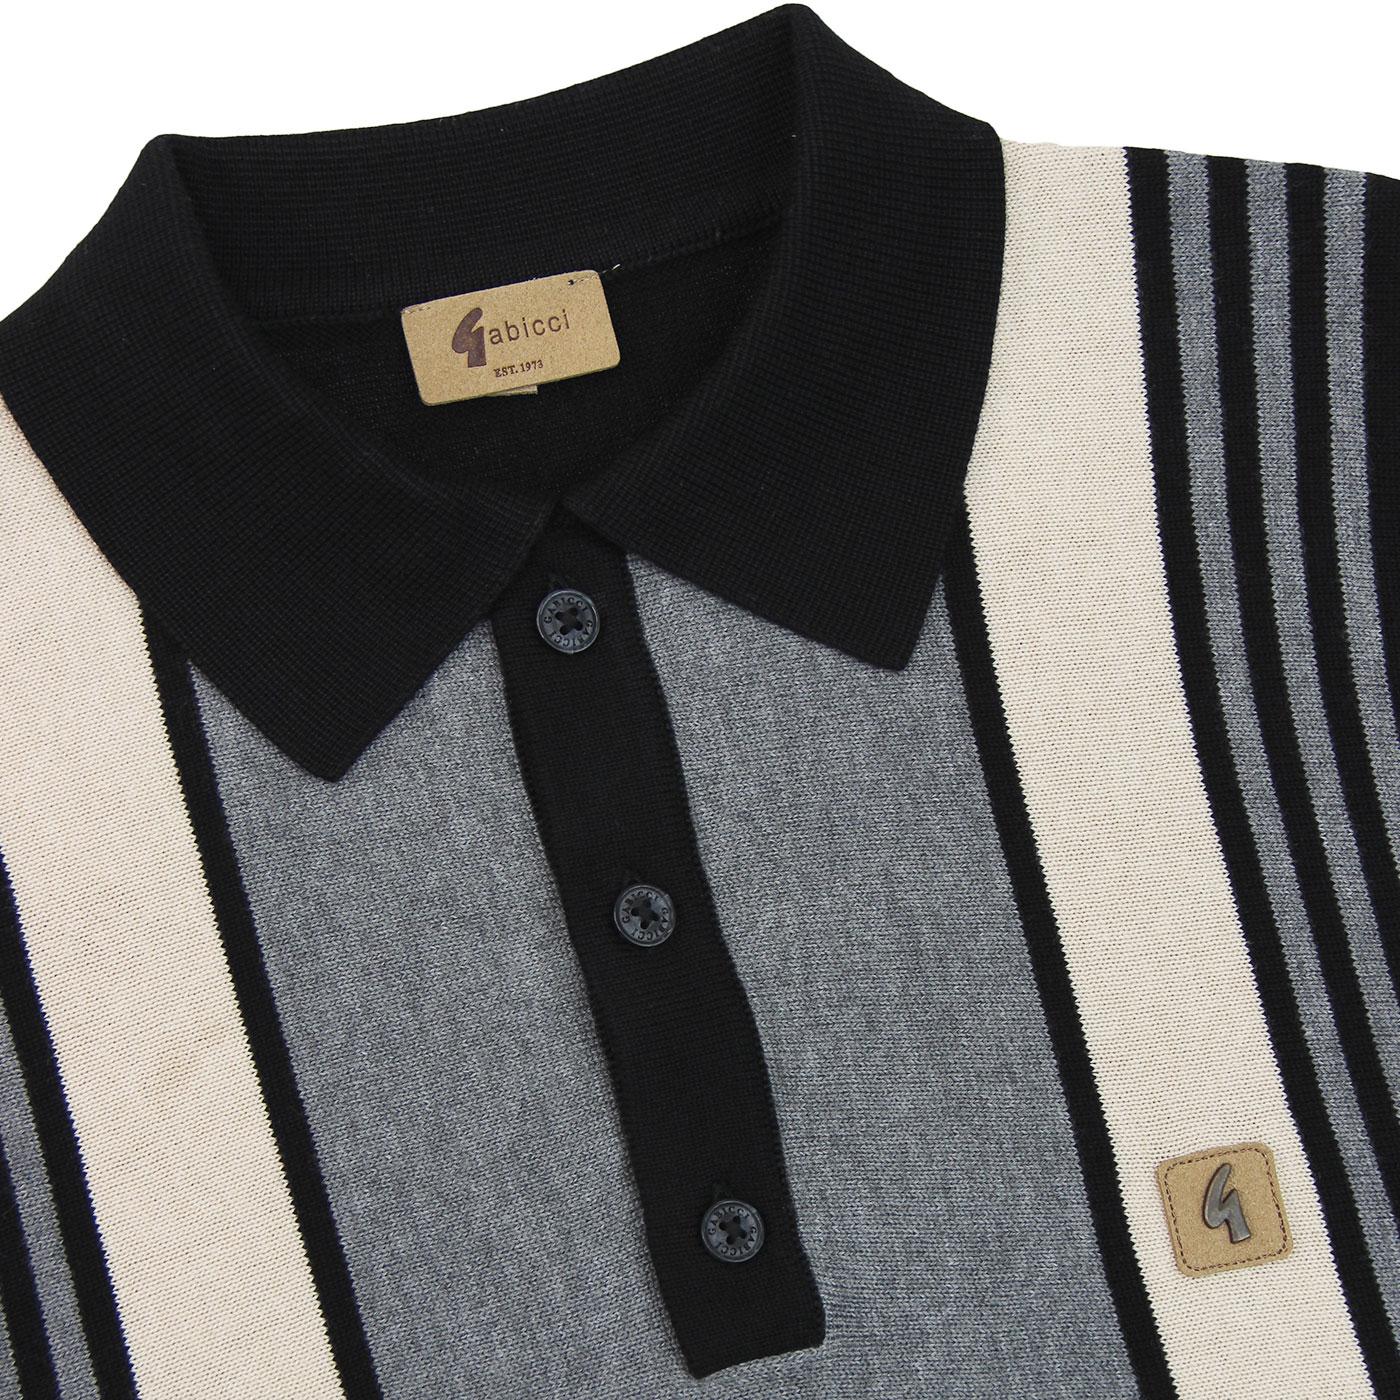 GABICCI VINTAGE Searle 1960s Mod Stripe Knit Polo in Black